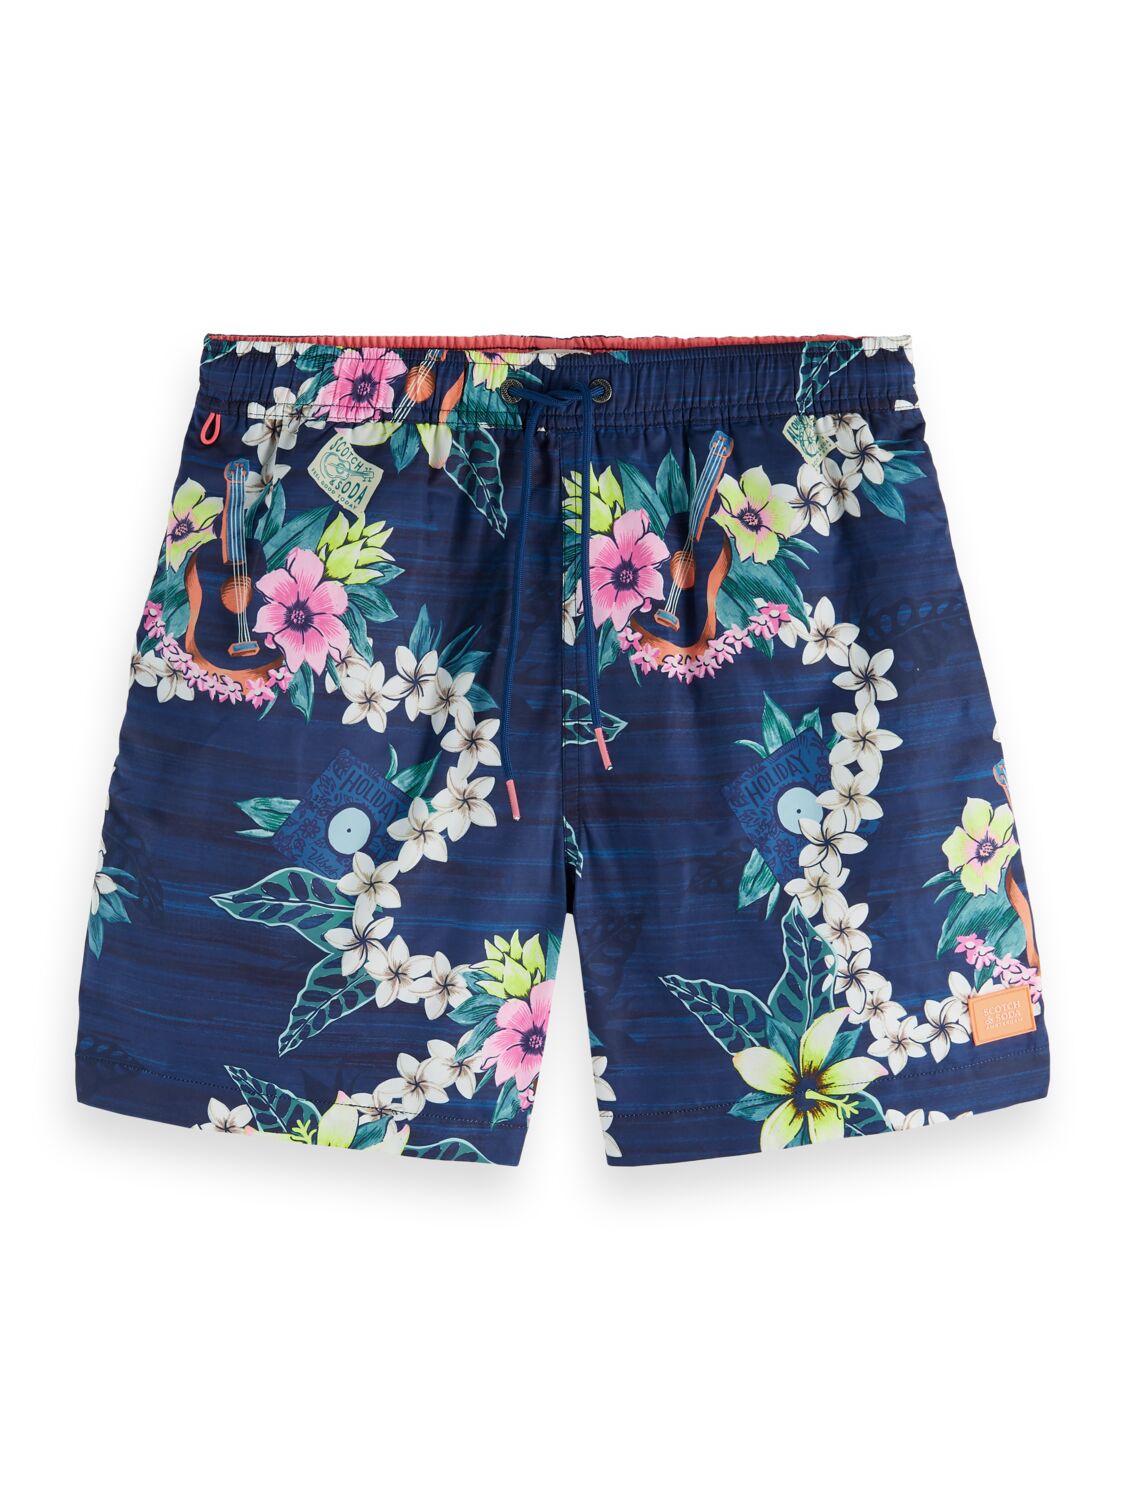 Scotch and Soda Recycled Nylon Swim Shorts - Navy Floral